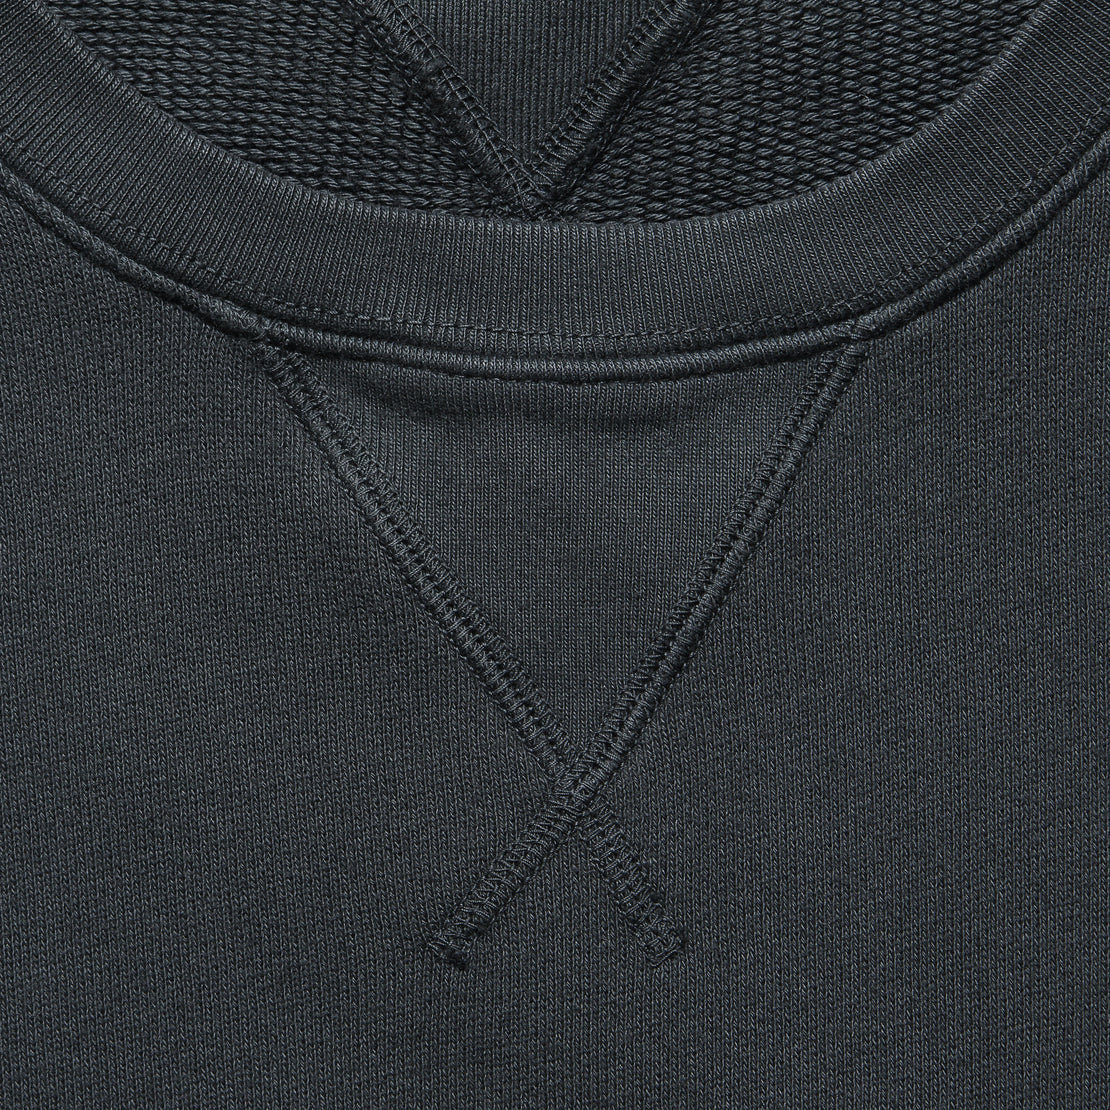 French Terry Crew Sweatshirt - Washed Black - Alex Mill - STAG Provisions - Tops - Fleece / Sweatshirt